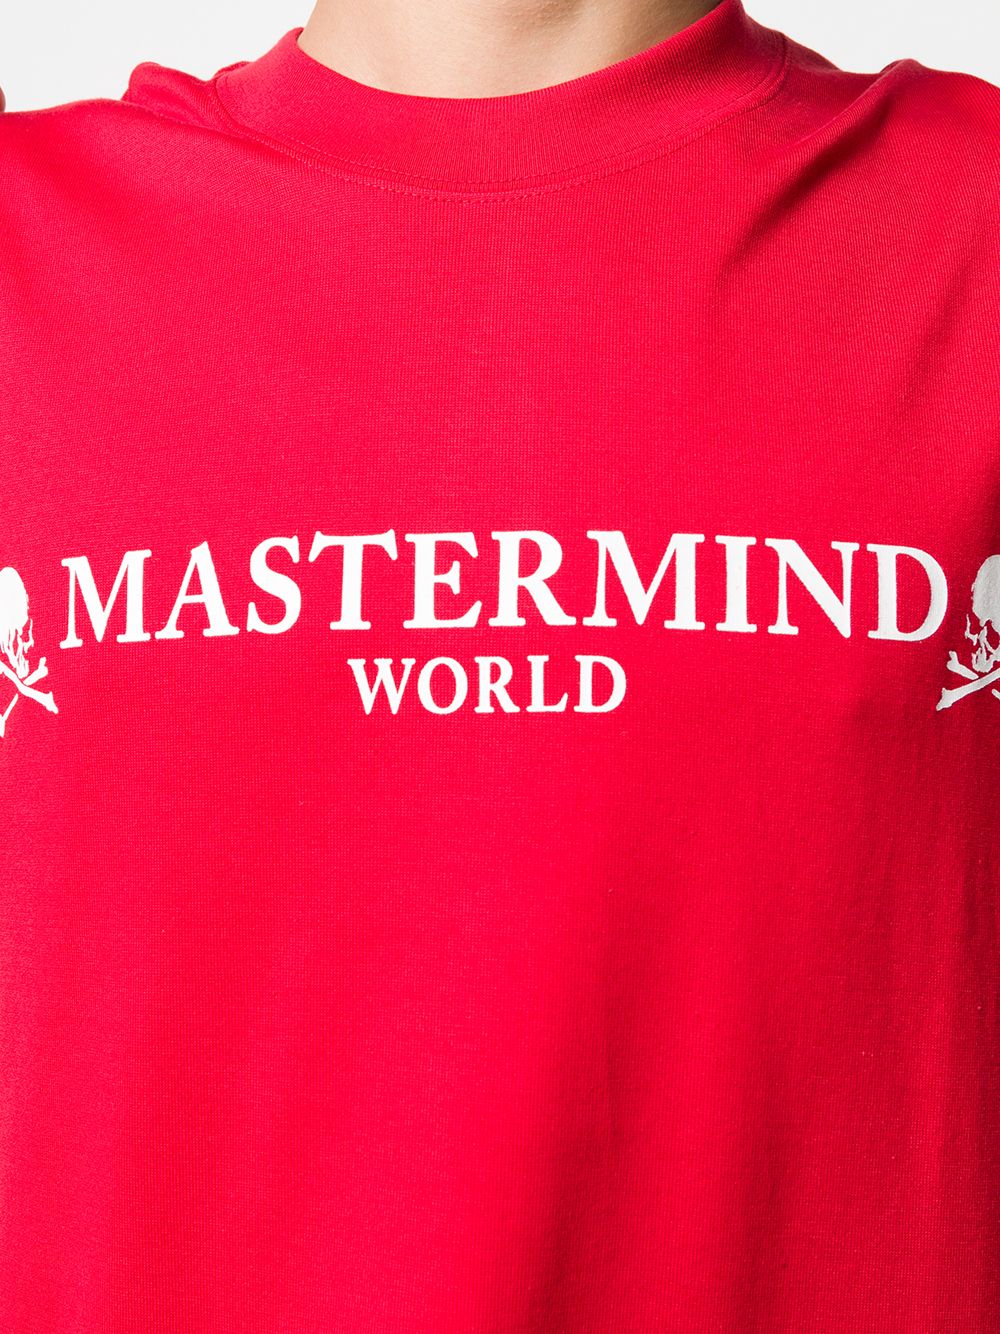 фото Mastermind world футболка свободного кроя с логотипом